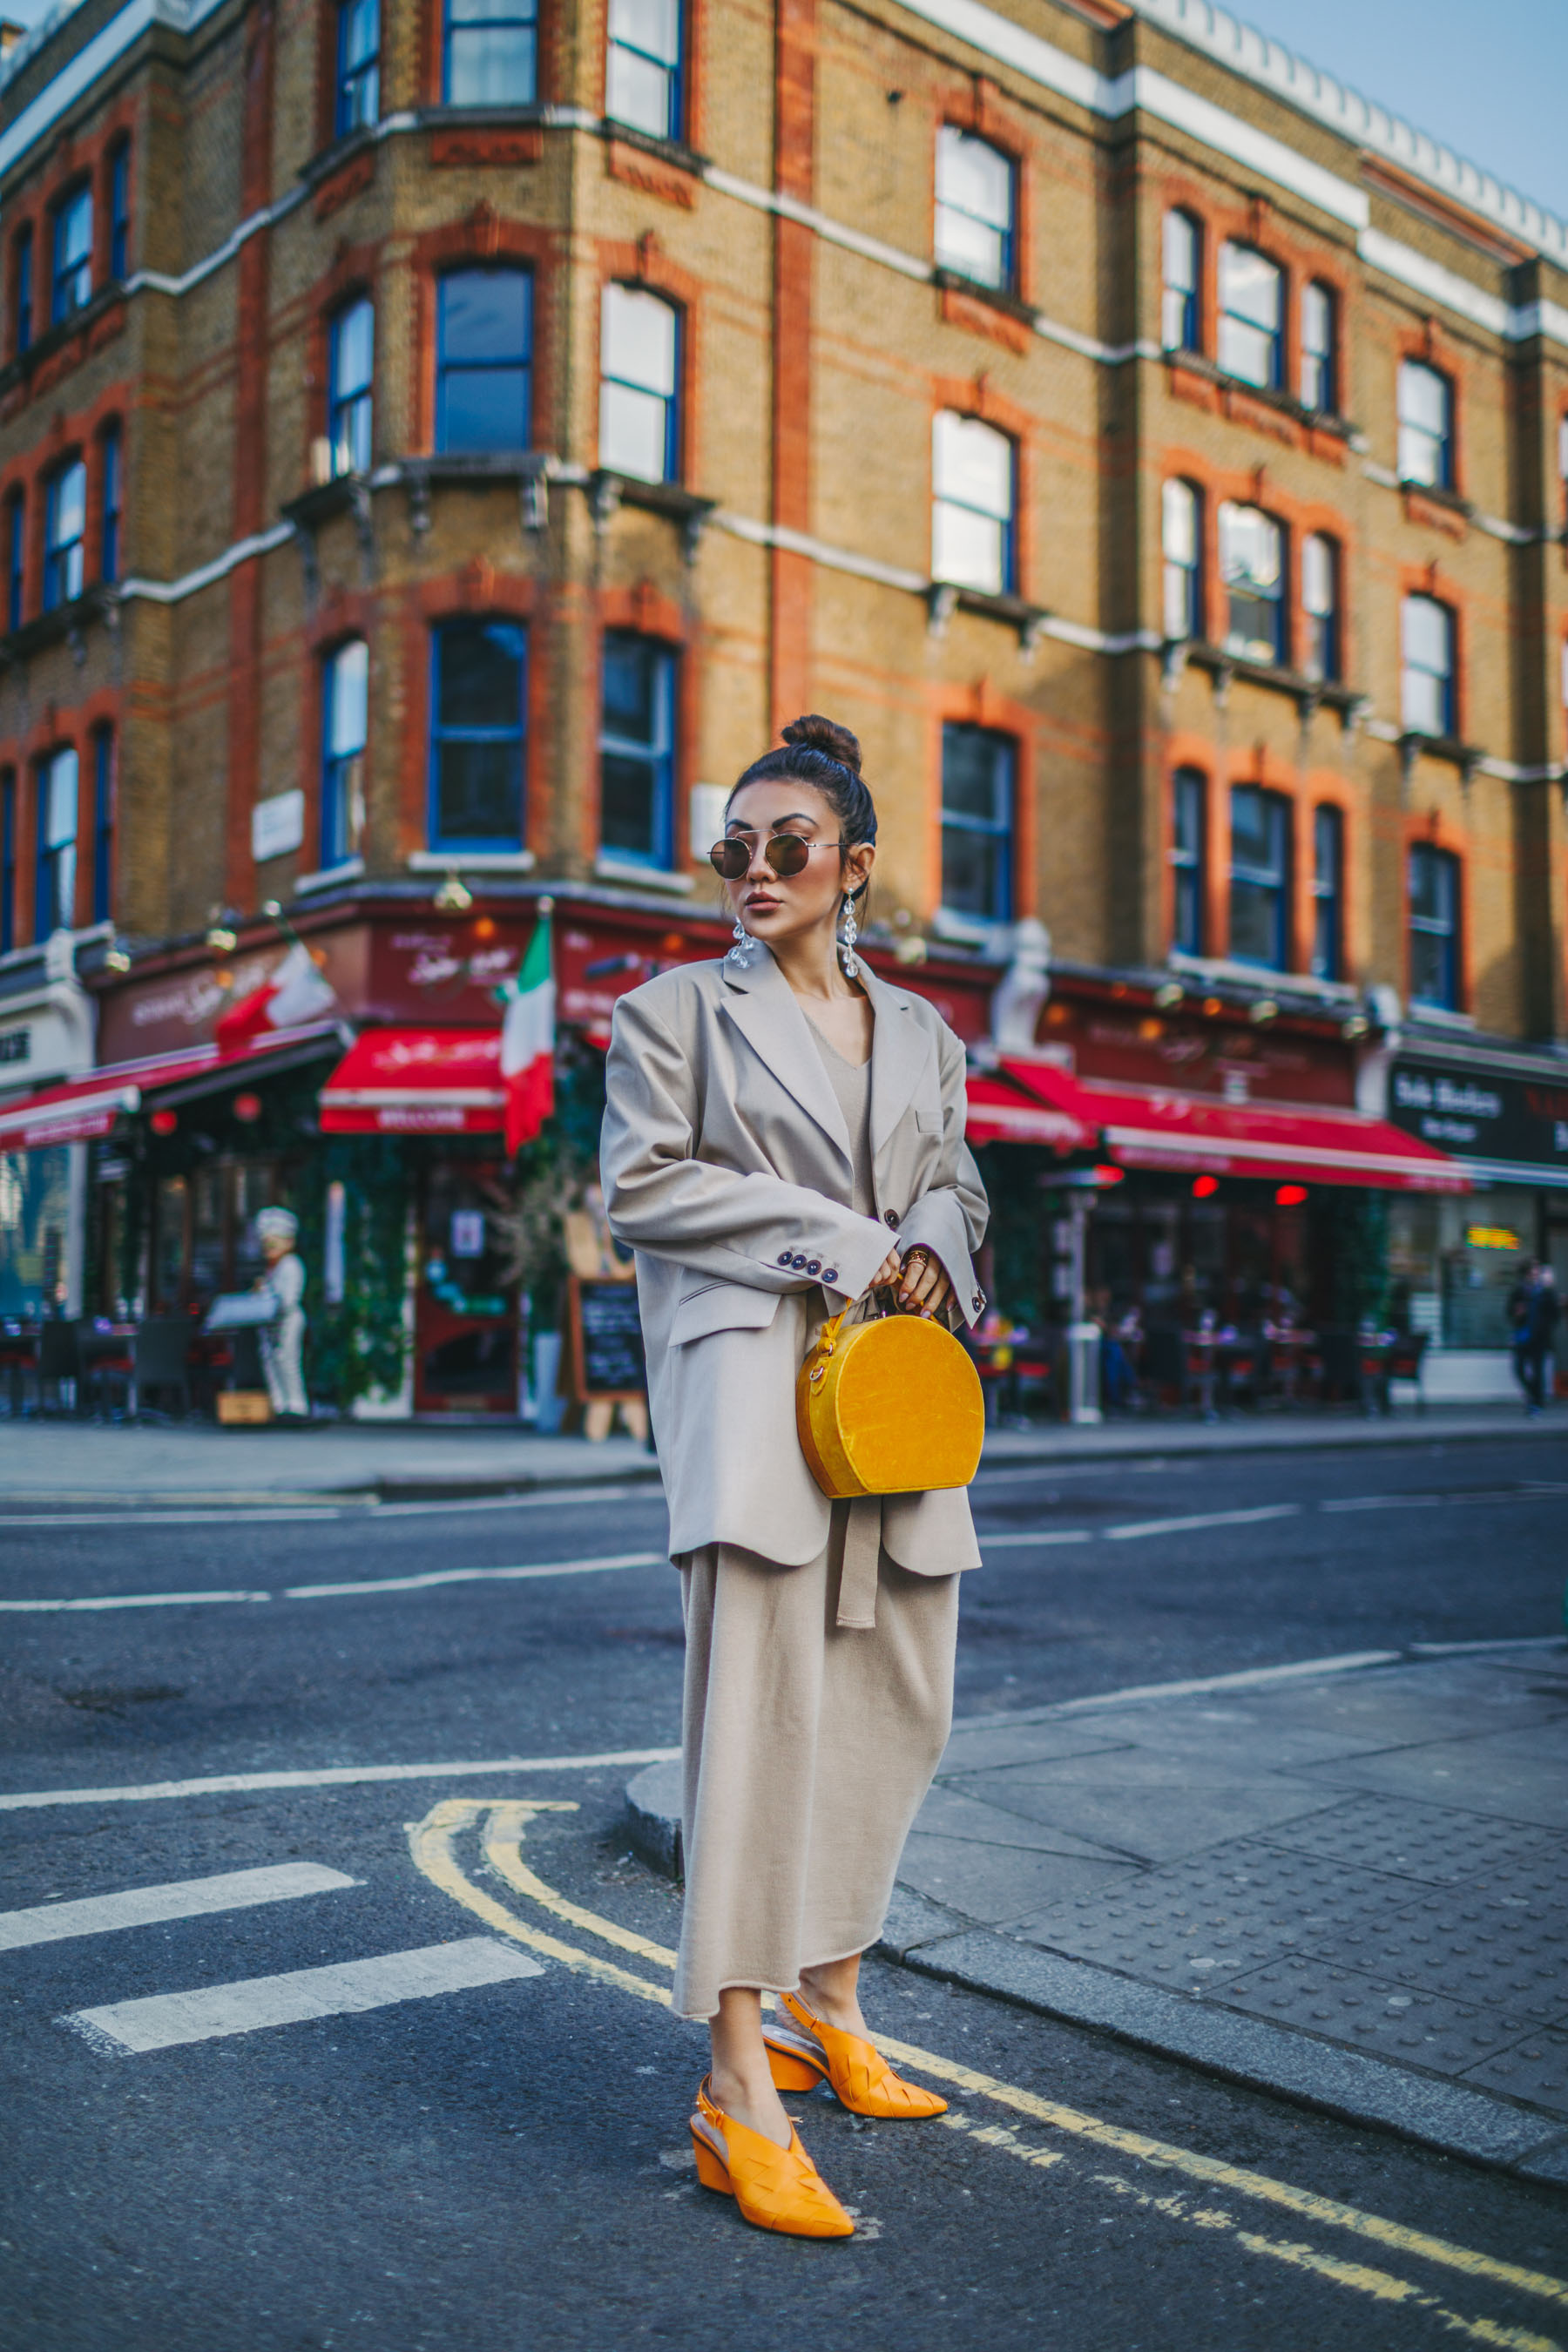 London Fashion Week Recap - Beige Outfit with yellow handbag, yellow circle bag // Notjessfashion.com